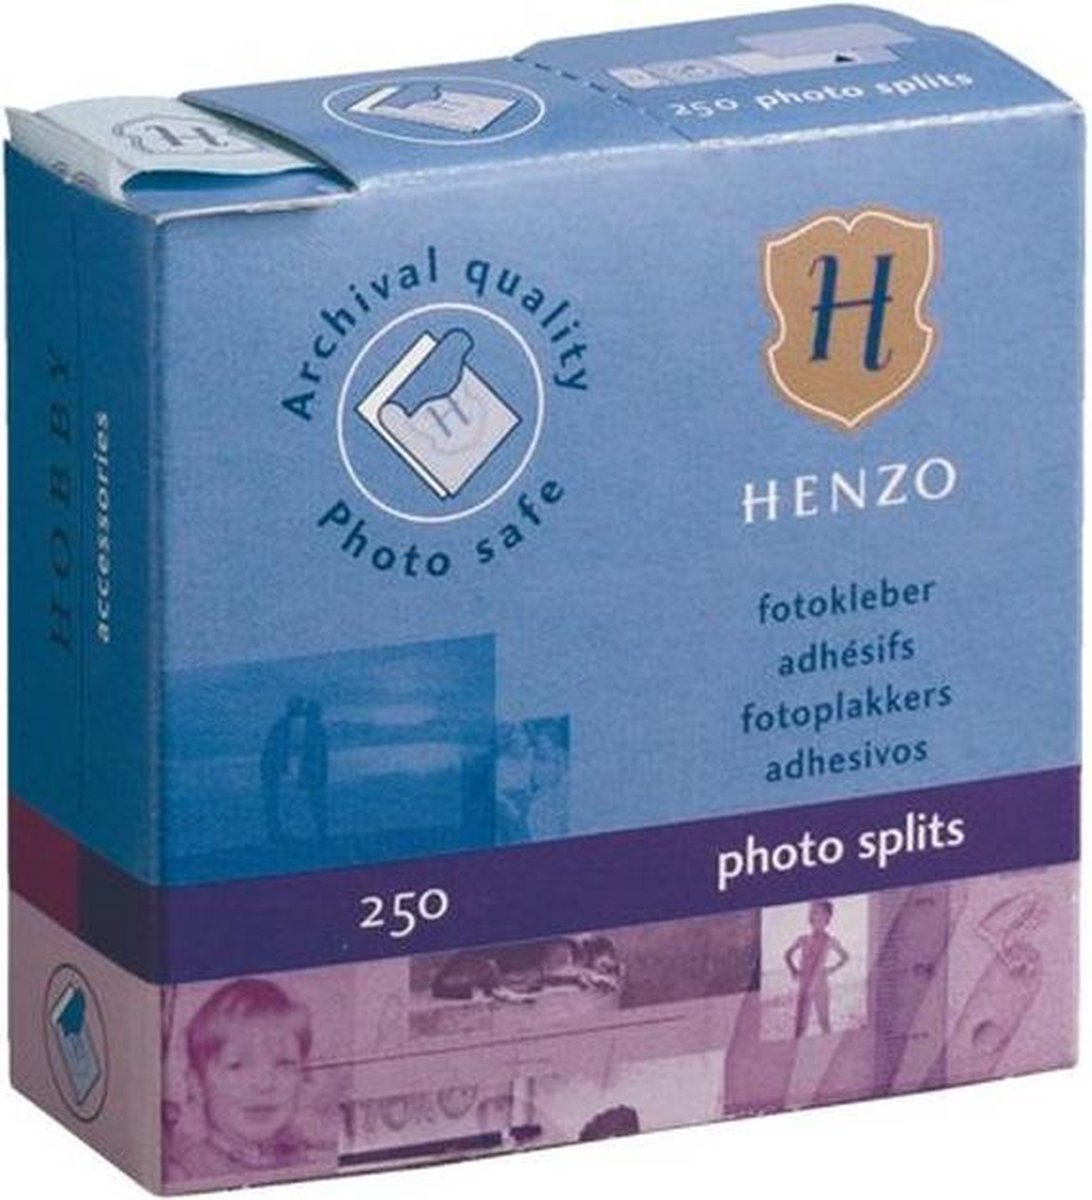 aan de andere kant, lanthaan Leidinggevende Henzo Fotoplakkers Transparant 250 stuks - Klein Warenhuis 't Kloske Klein  Warenhuis 't Kloske